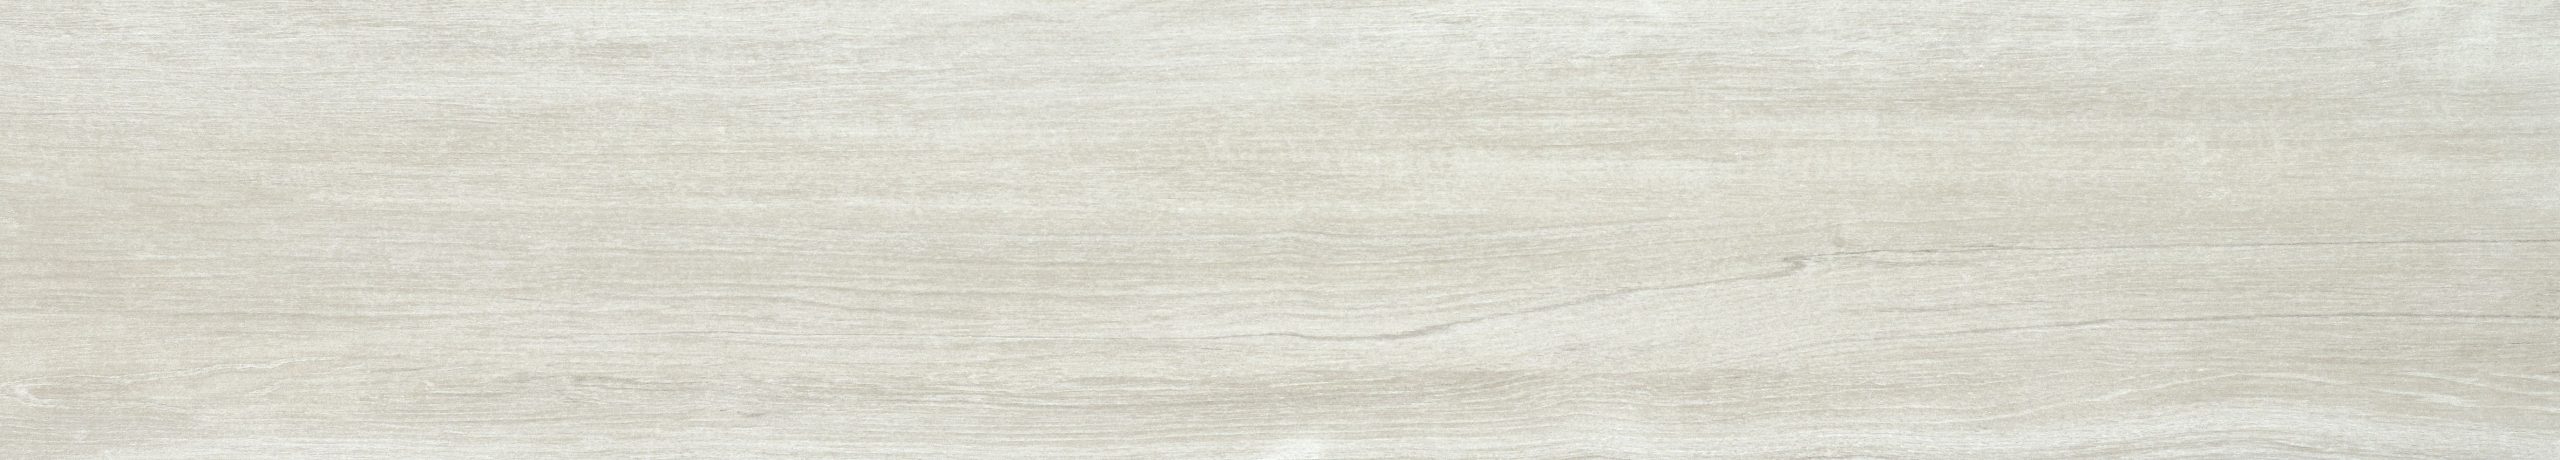 Vilema 23x120 sin rectificar 23x120 pavimento azulejo porcelánico madera sin rectificar wood plank porcelain tile